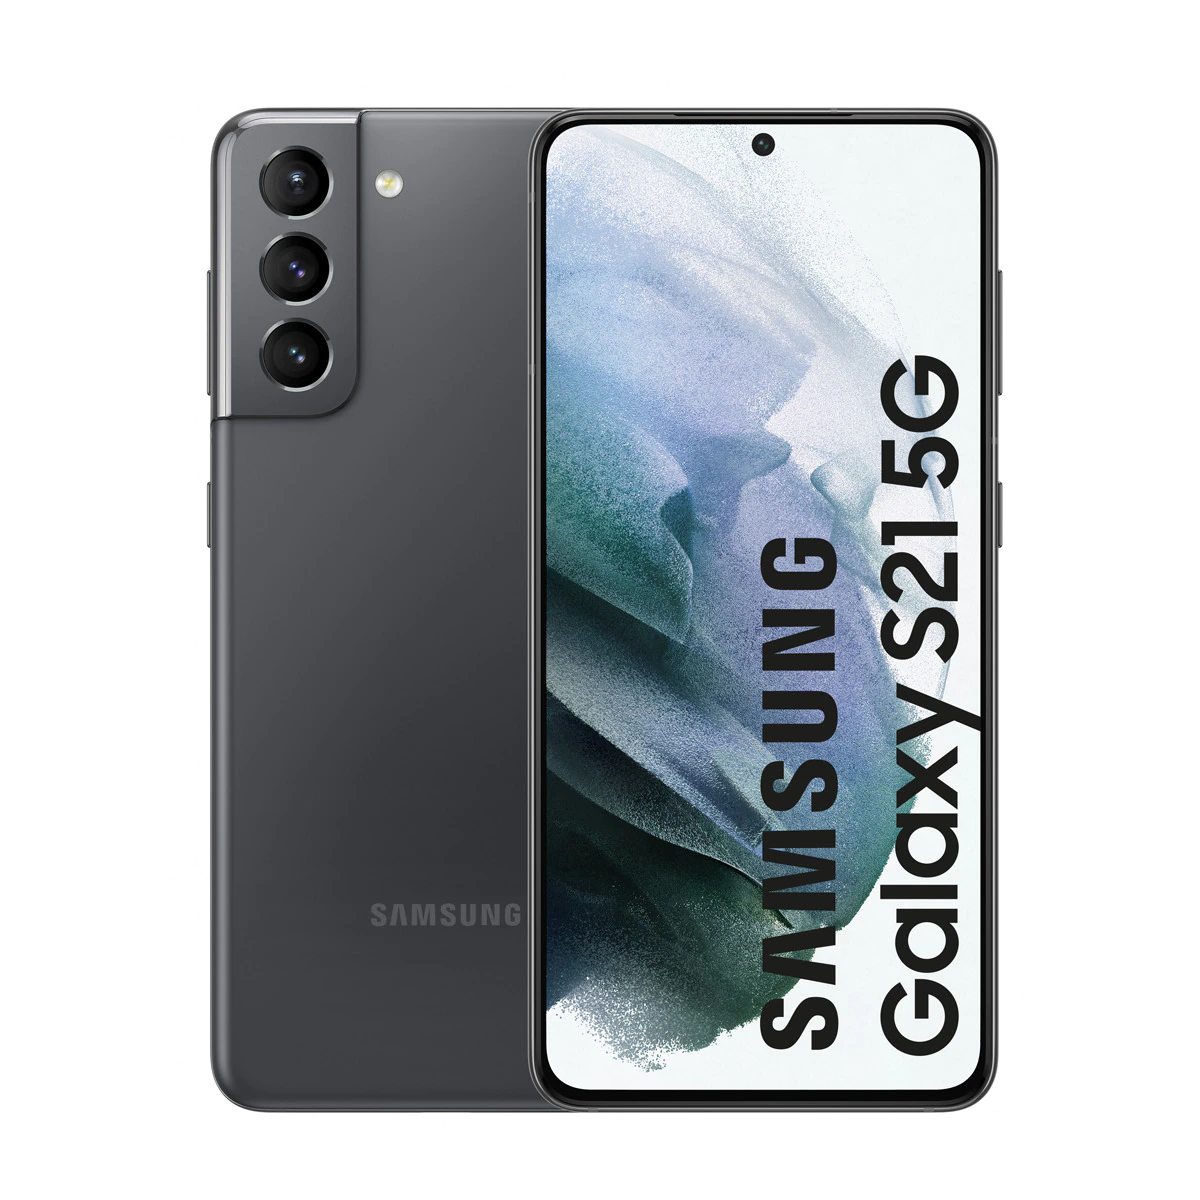 Samsung Galaxy S21 5G 8 GB + 128 GB gris móvil libre